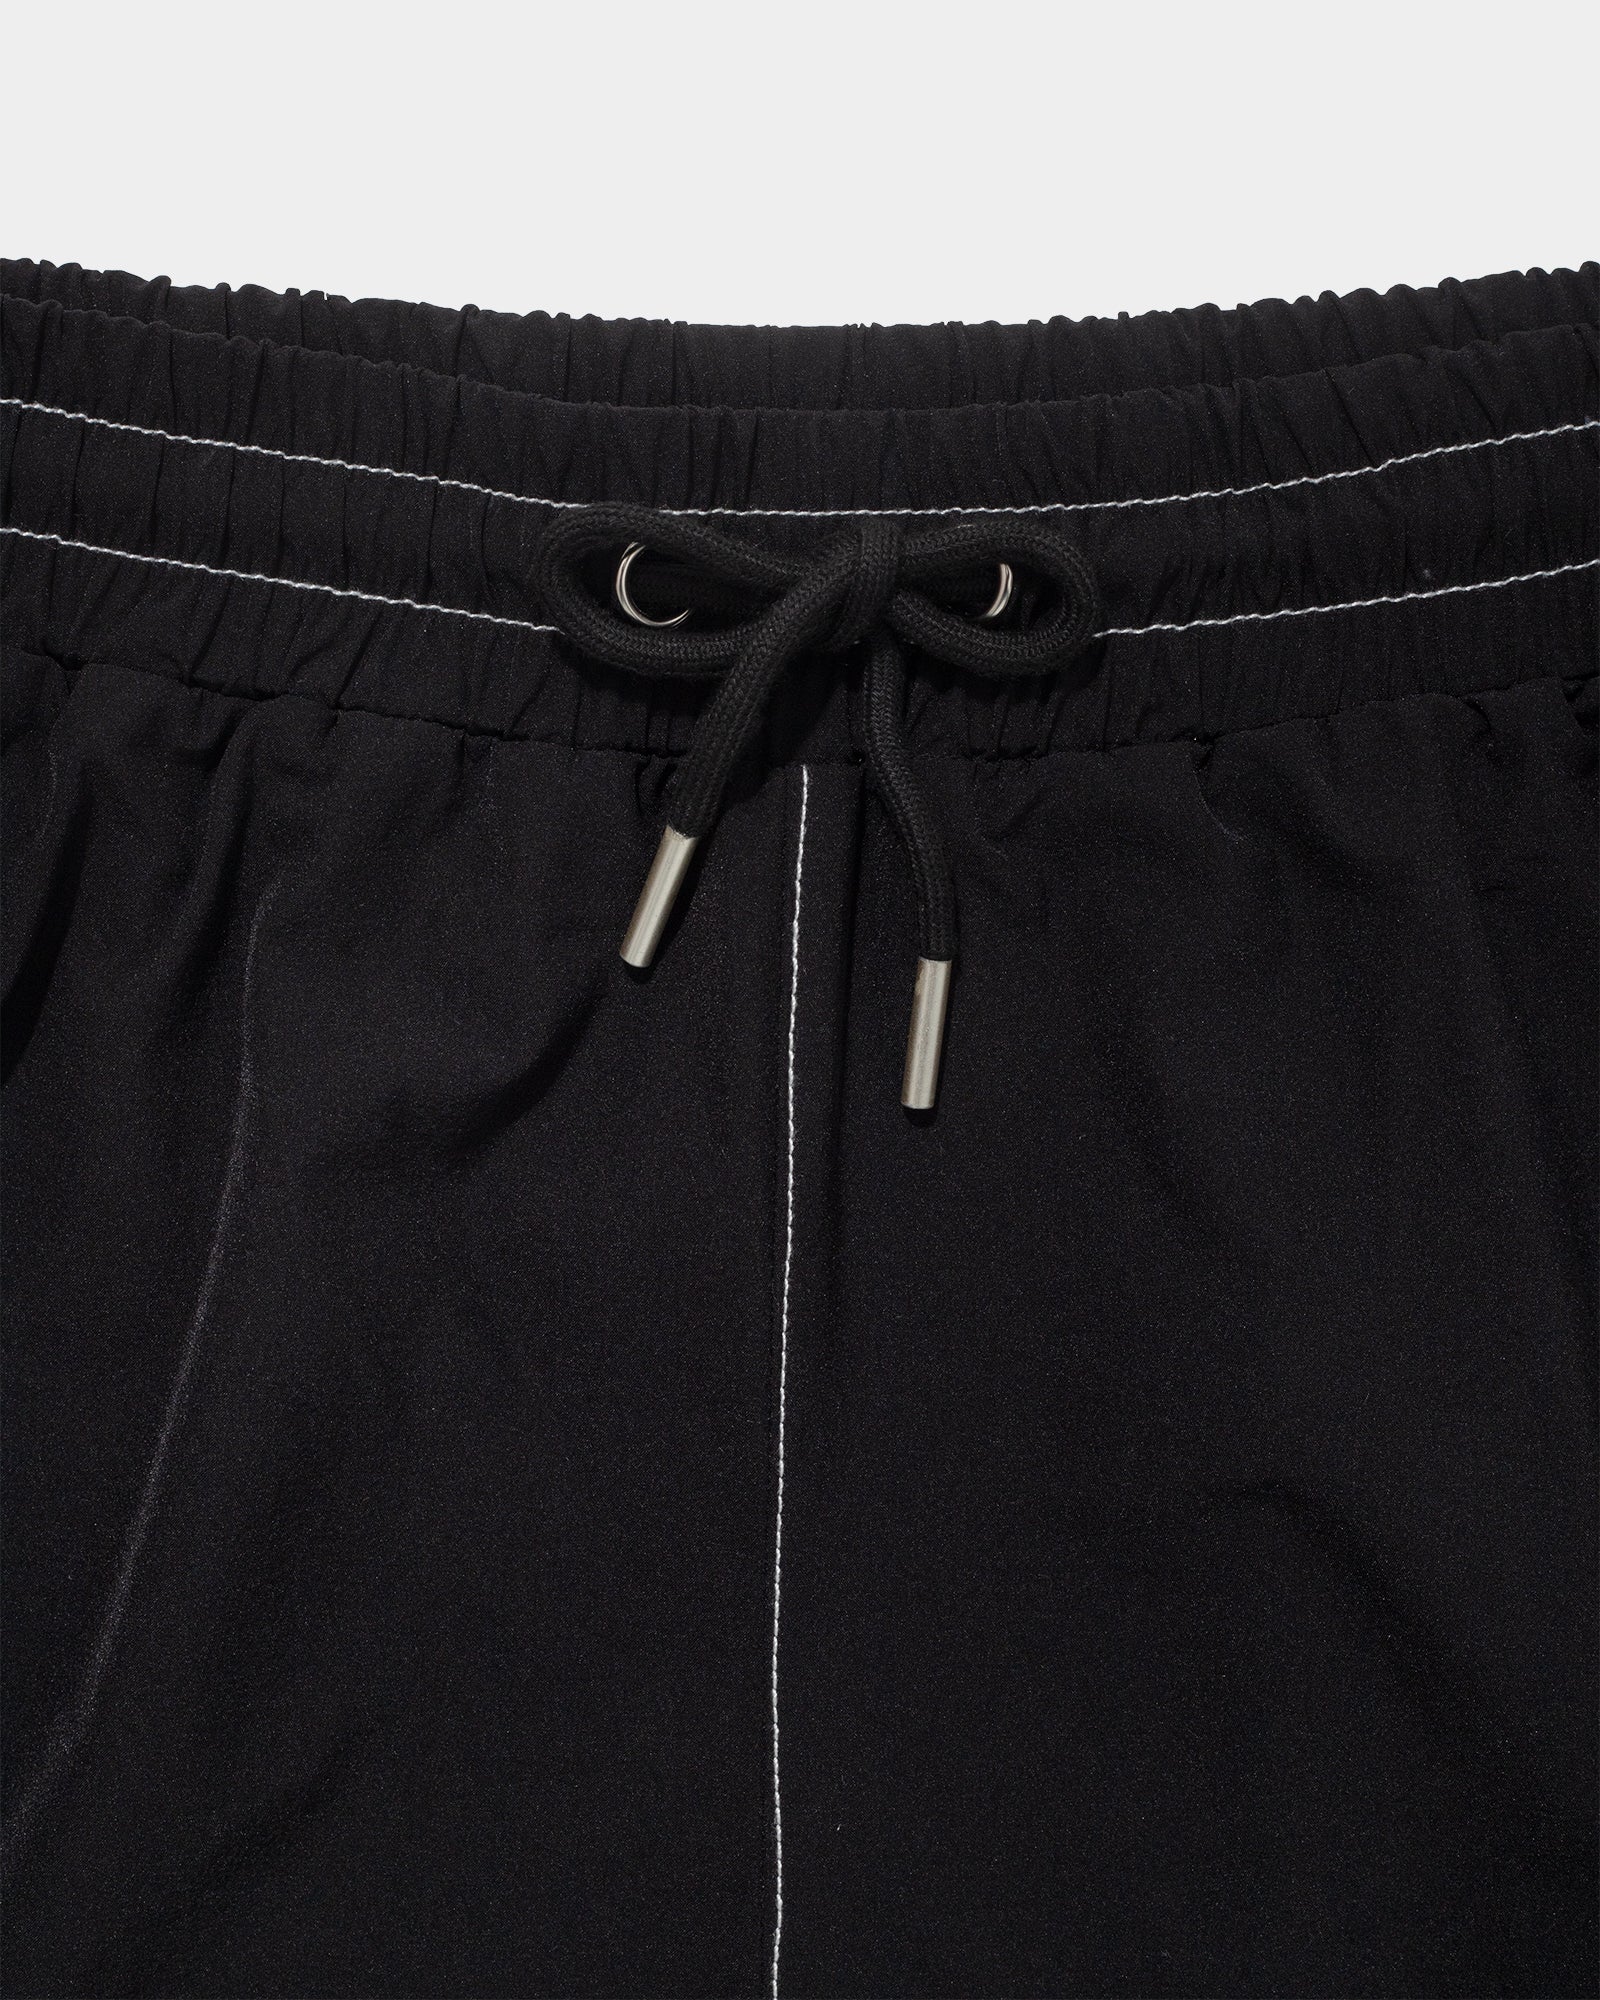 Domino Shorts (Black)